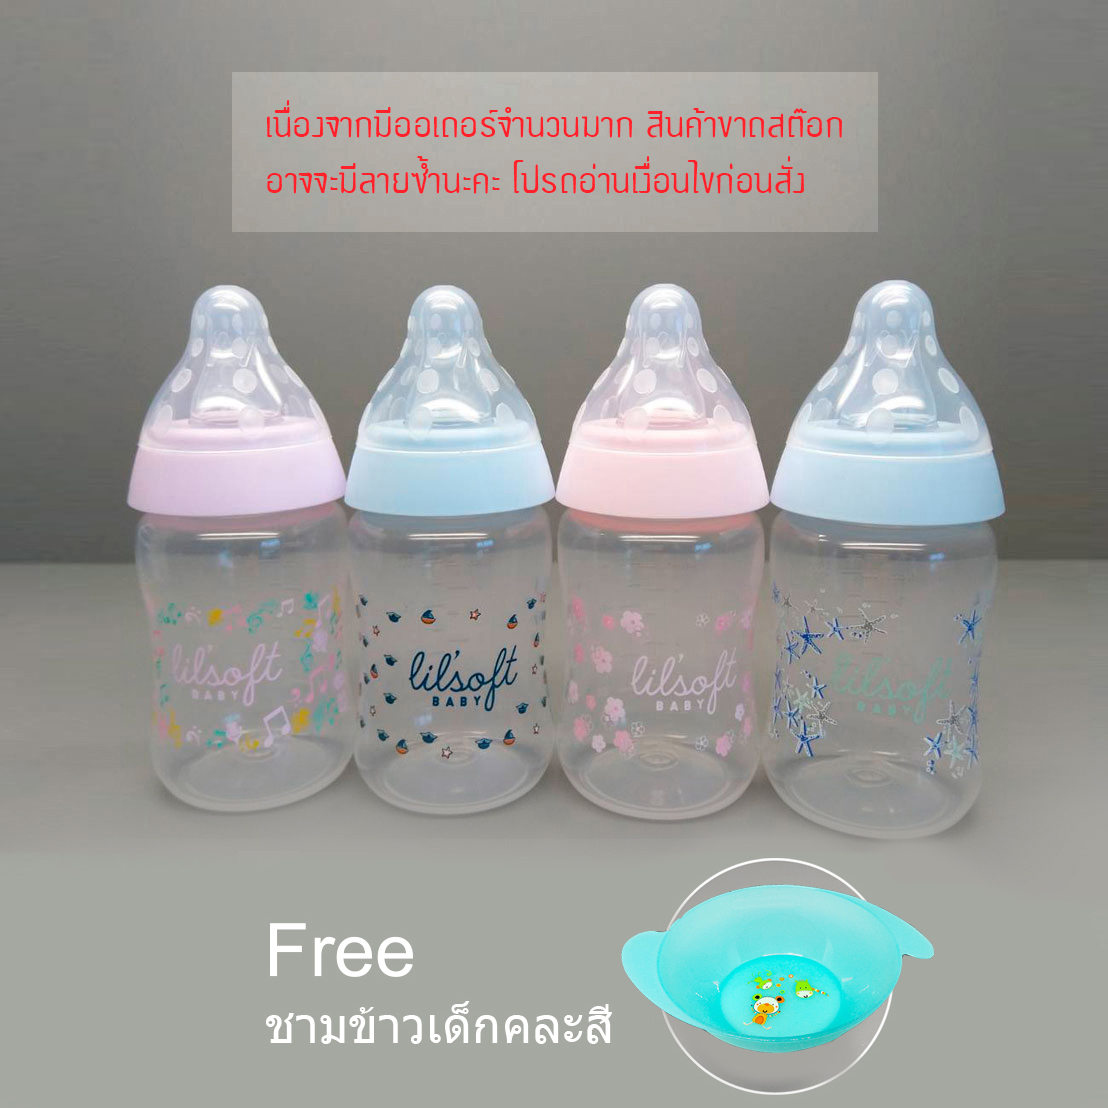 NUBORN ขวดนมคอแคบ Bottle 4 oz (125ml.) พร้อมจุกนม Anti colic ชุด 4 ขวดคละลาย แถม ชามข้าวเด็ก คละสี